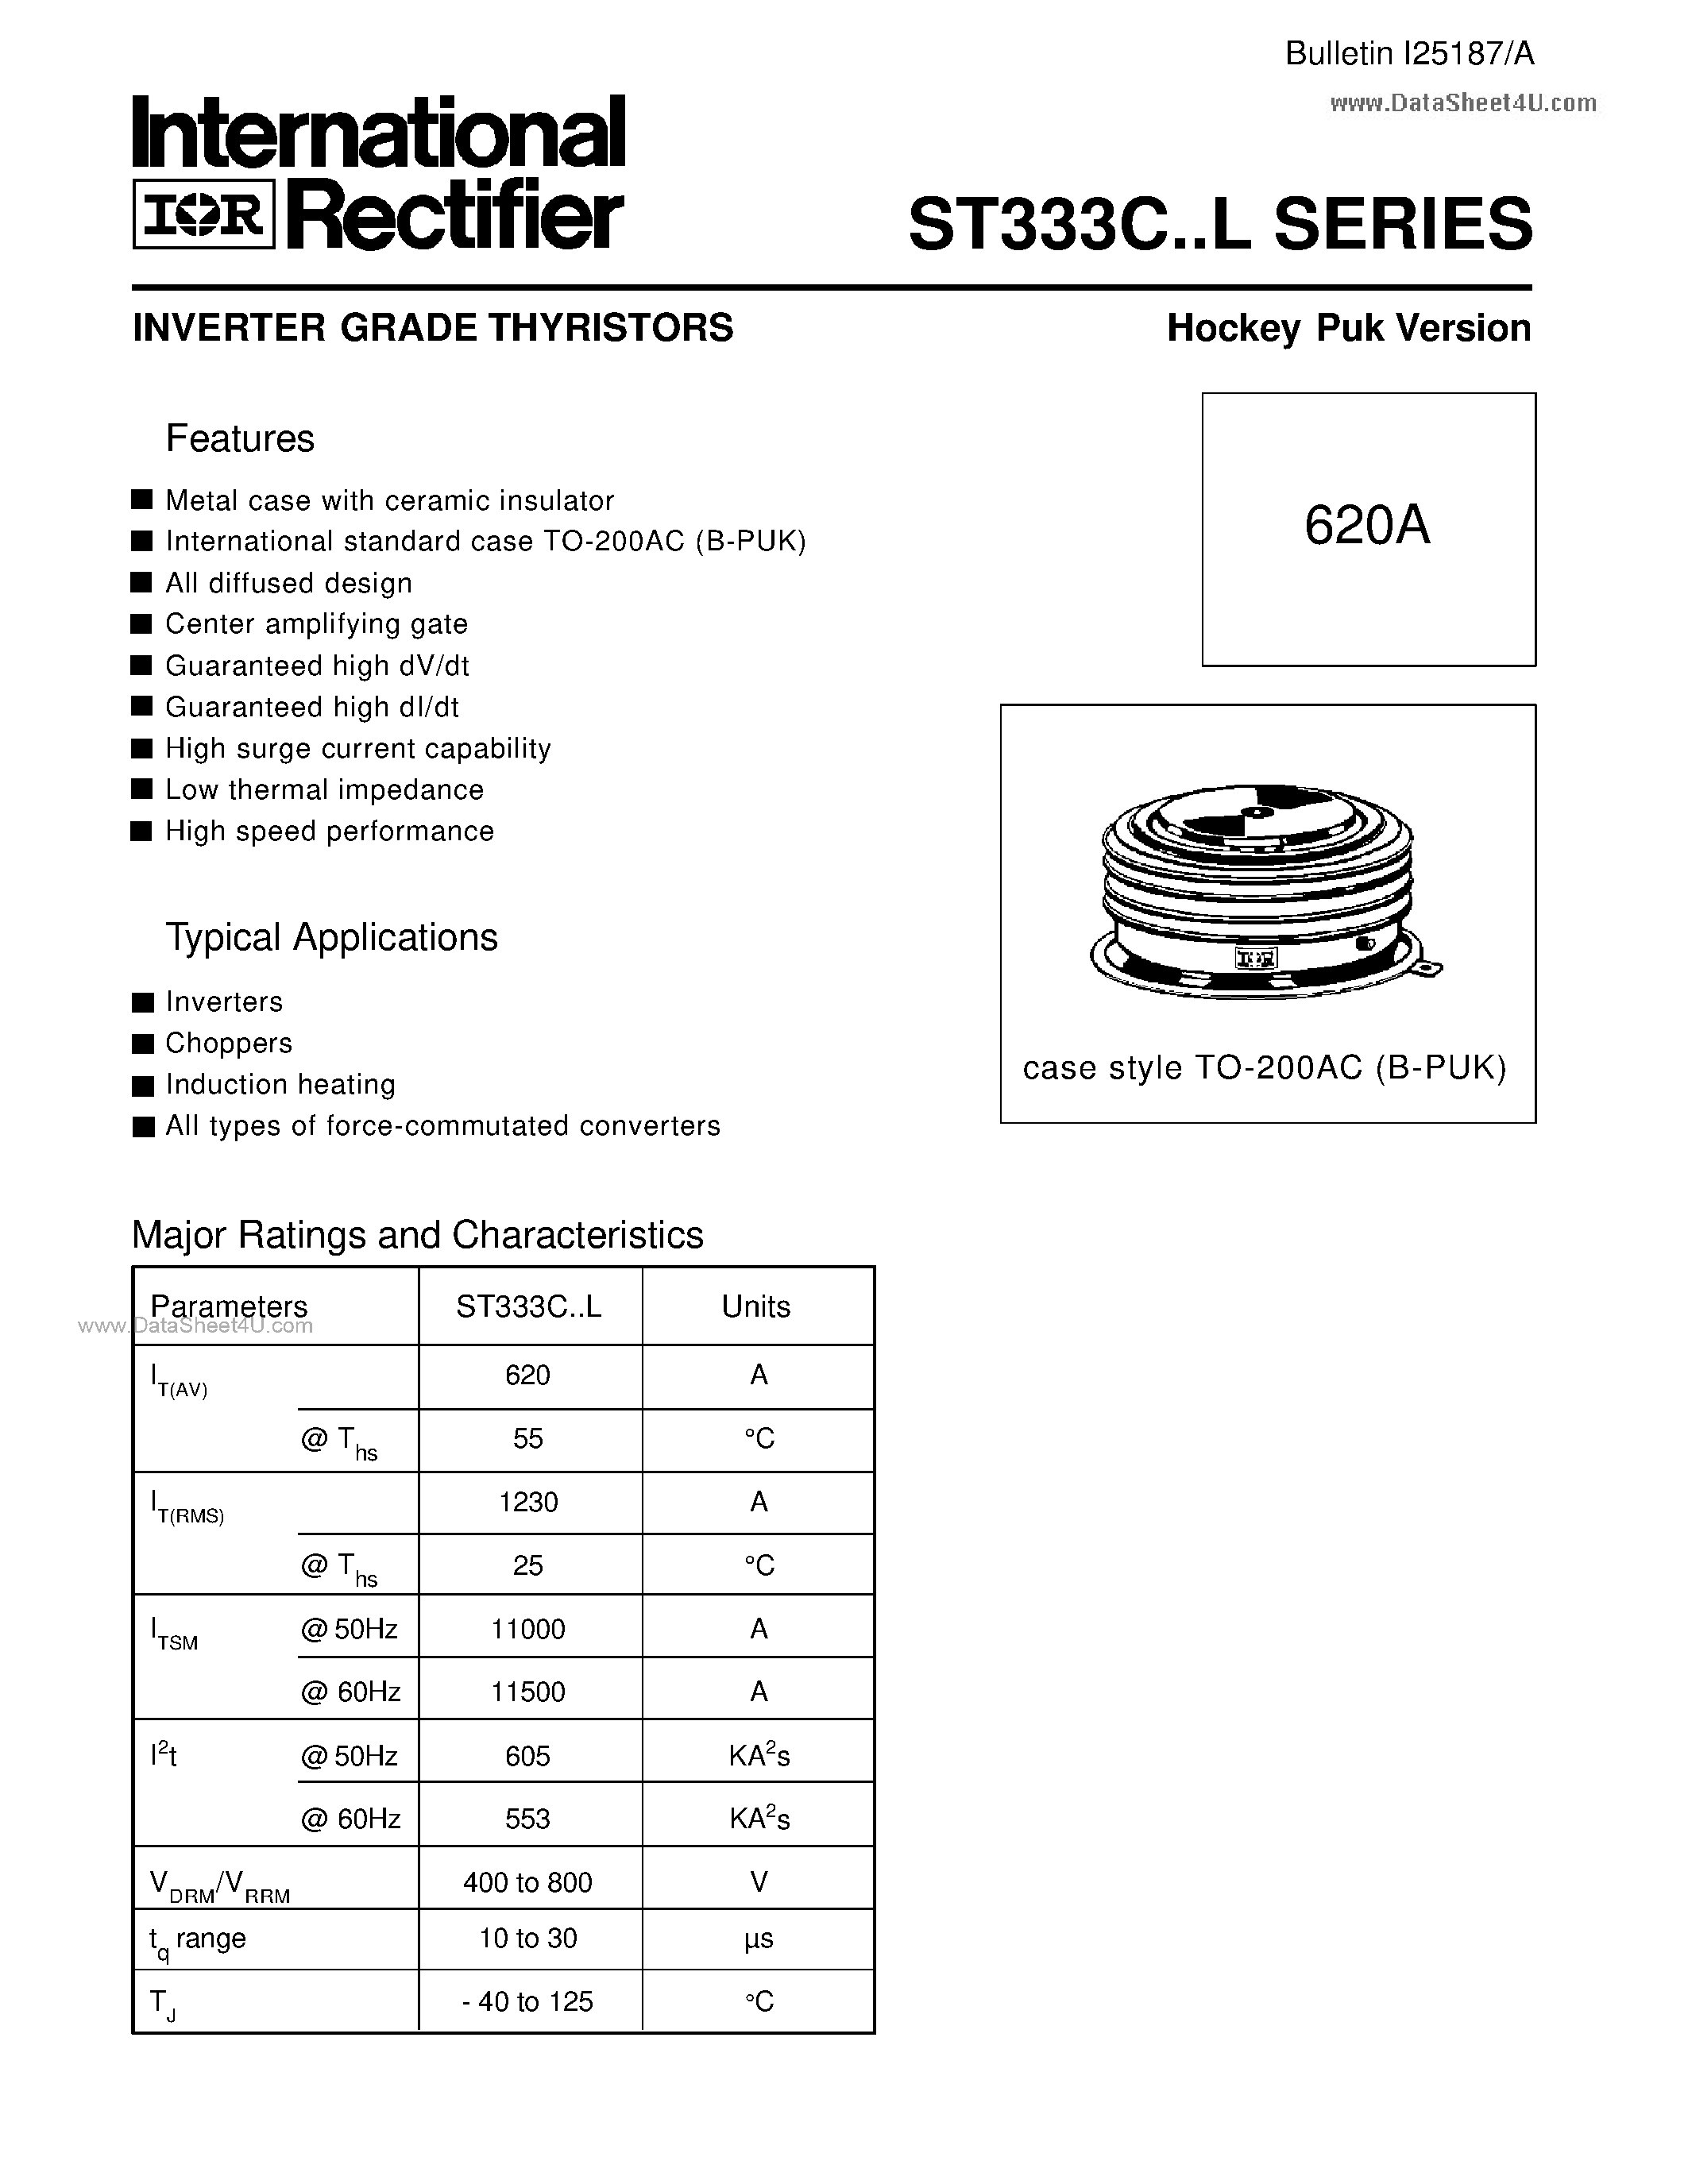 Datasheet ST333C - INVERTER GRADE THYRISTORS Hockey Puk Version page 2